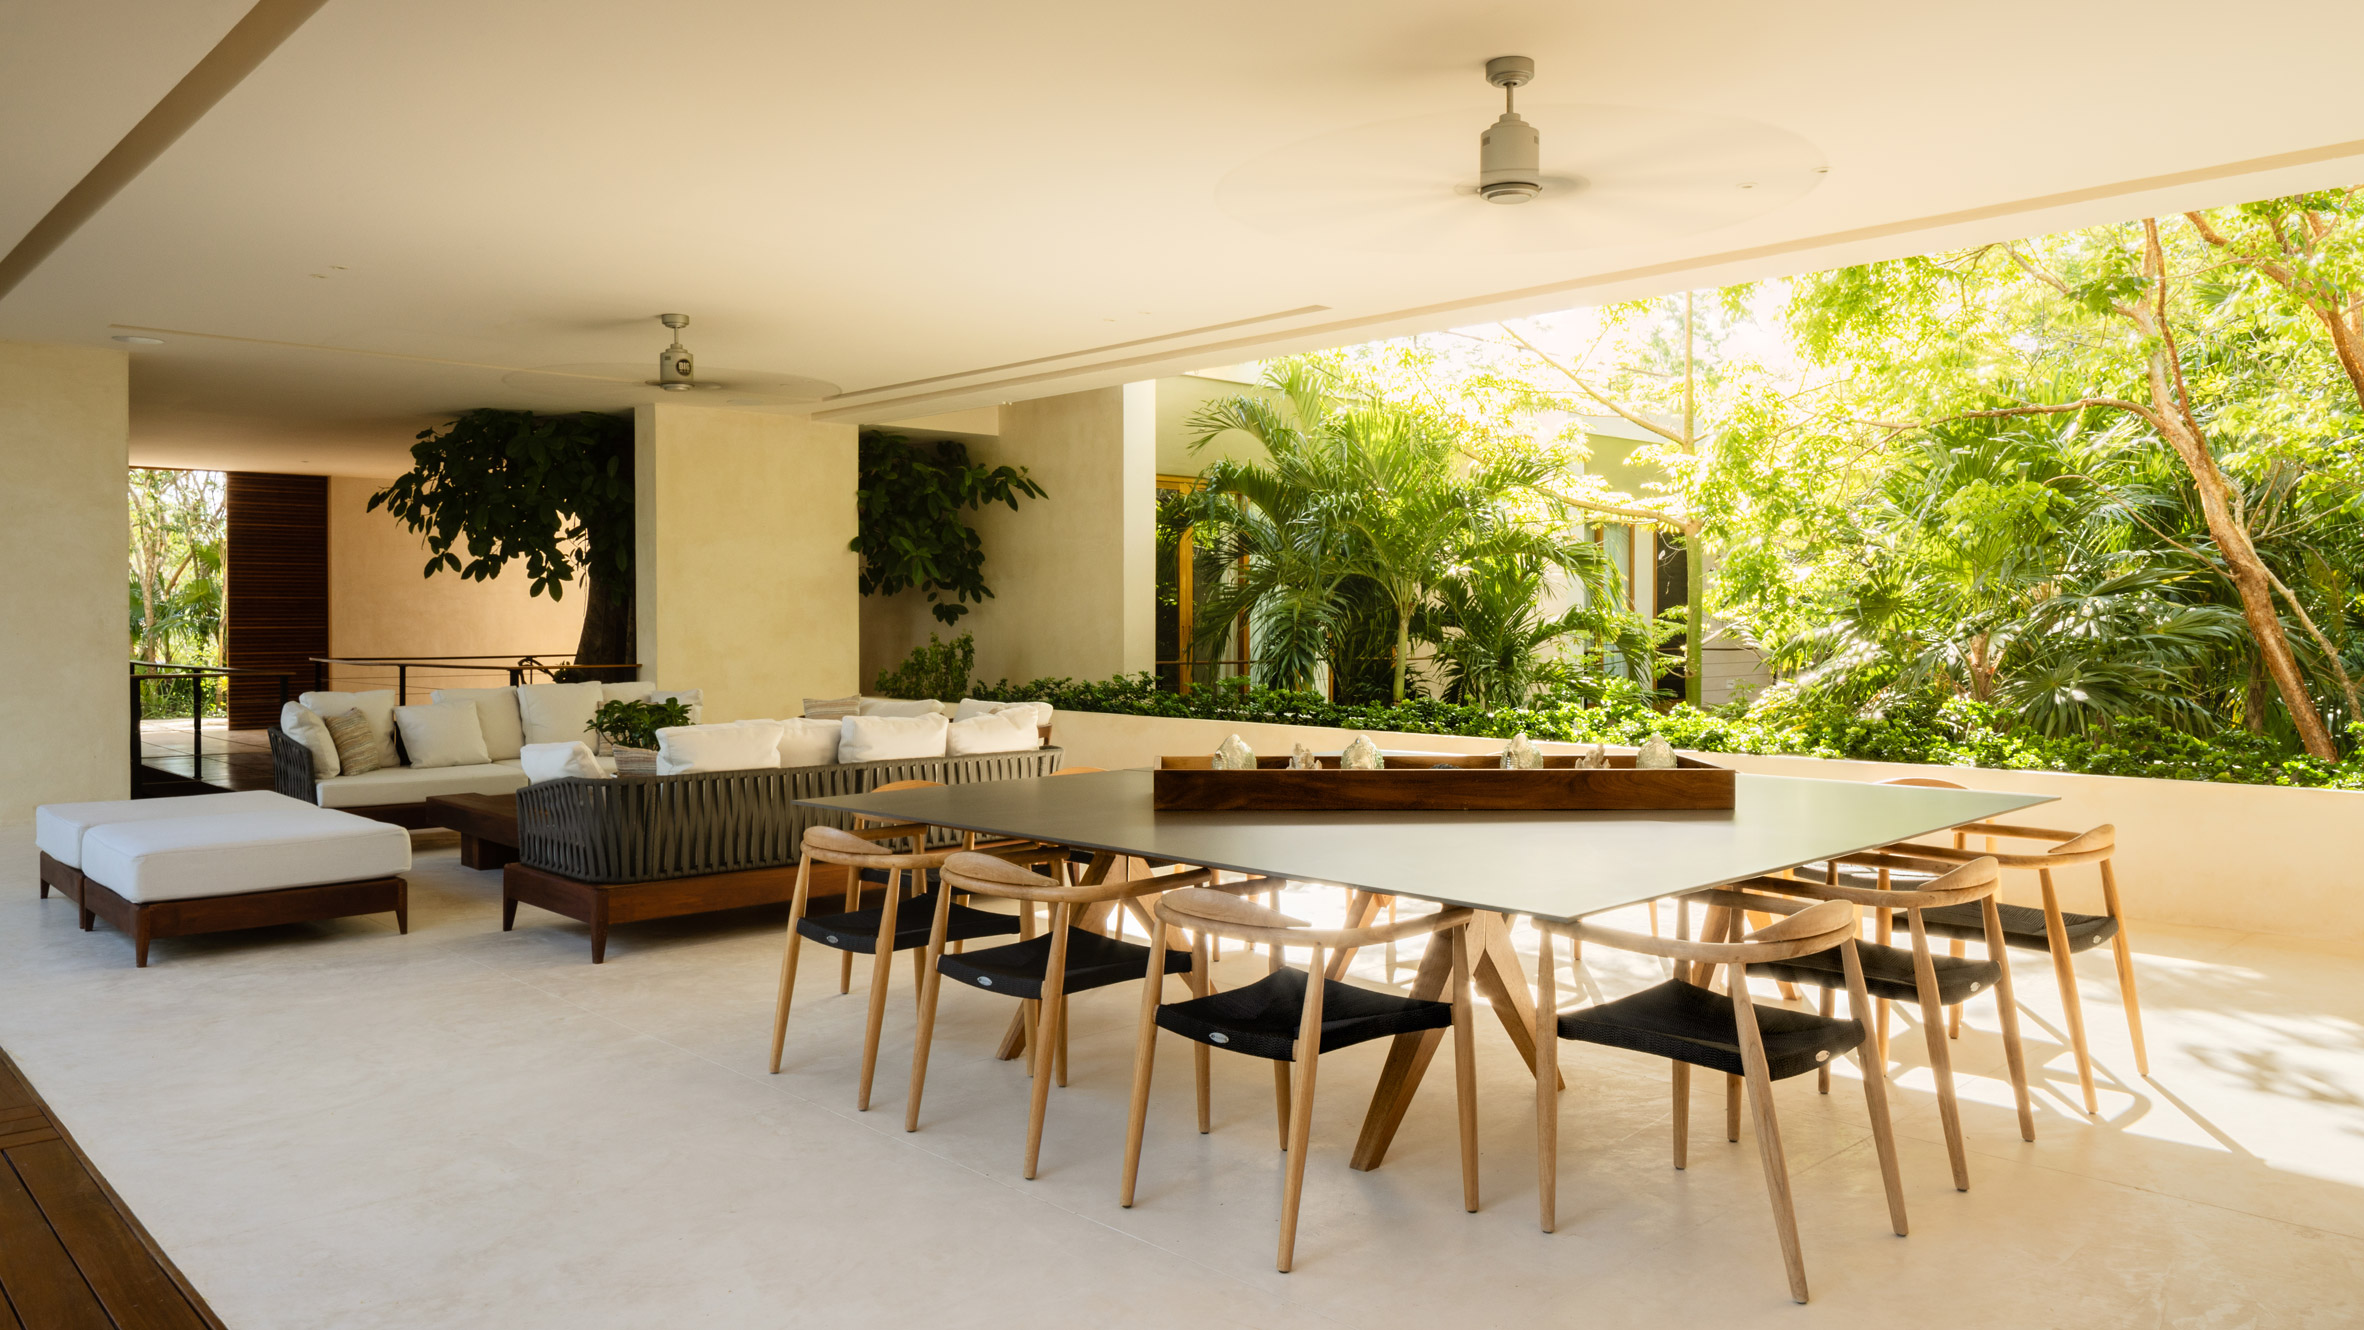 Sordo Madaleno organises Casa Cozumel around plant-filled courtyard